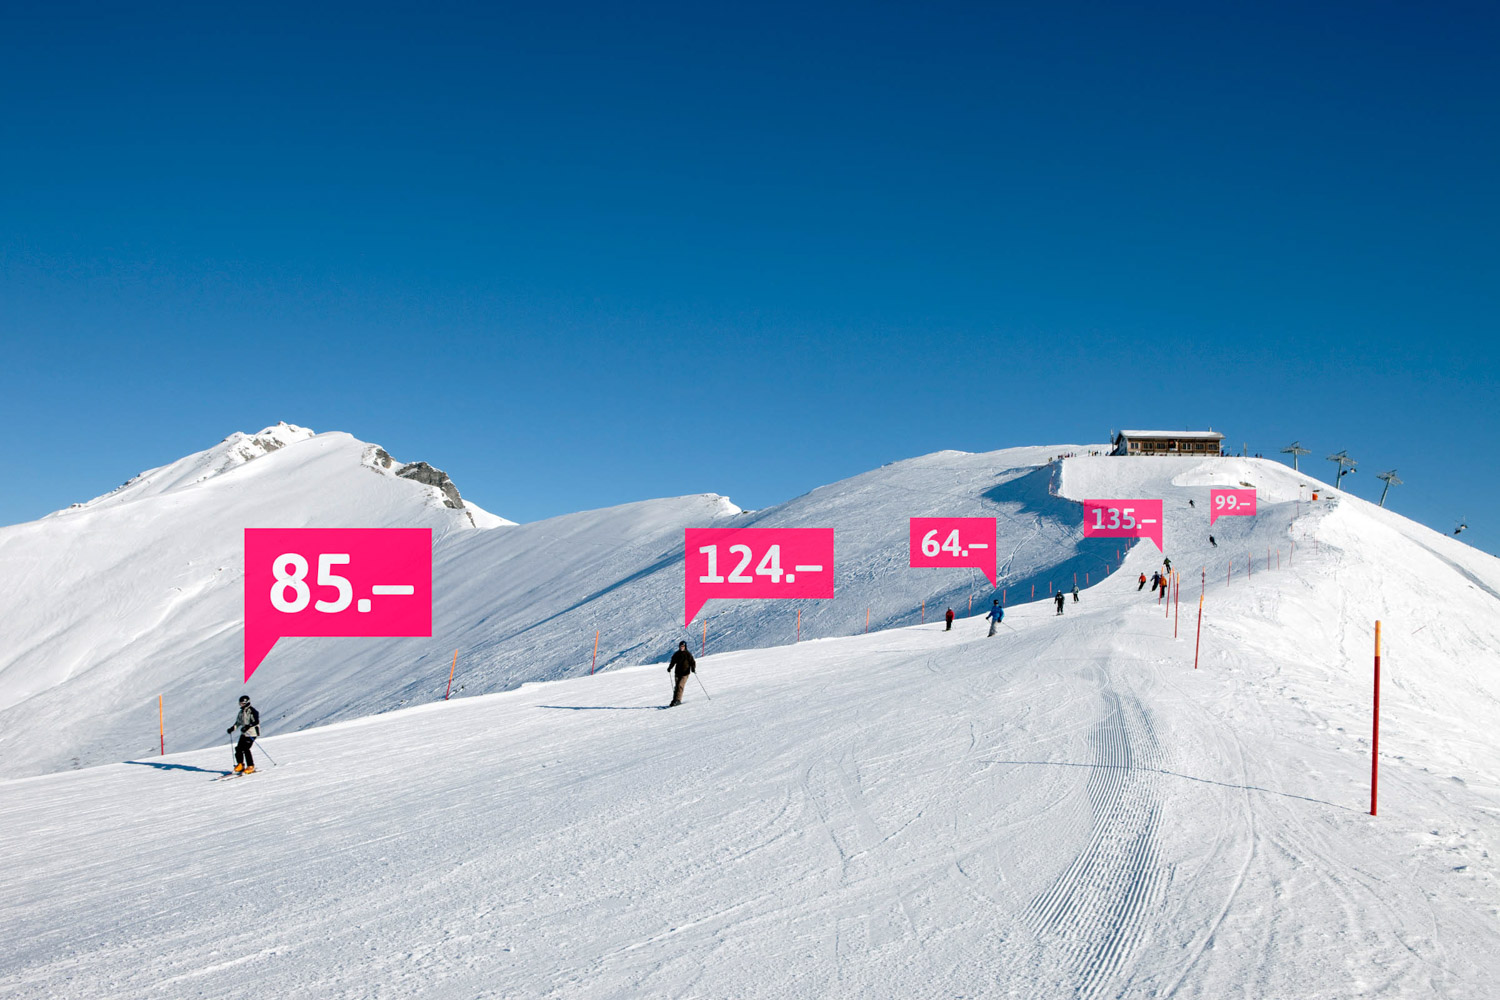 Easy-Ski Visual lenk-simmental.ch Winterspecial 17/18 Social-Media